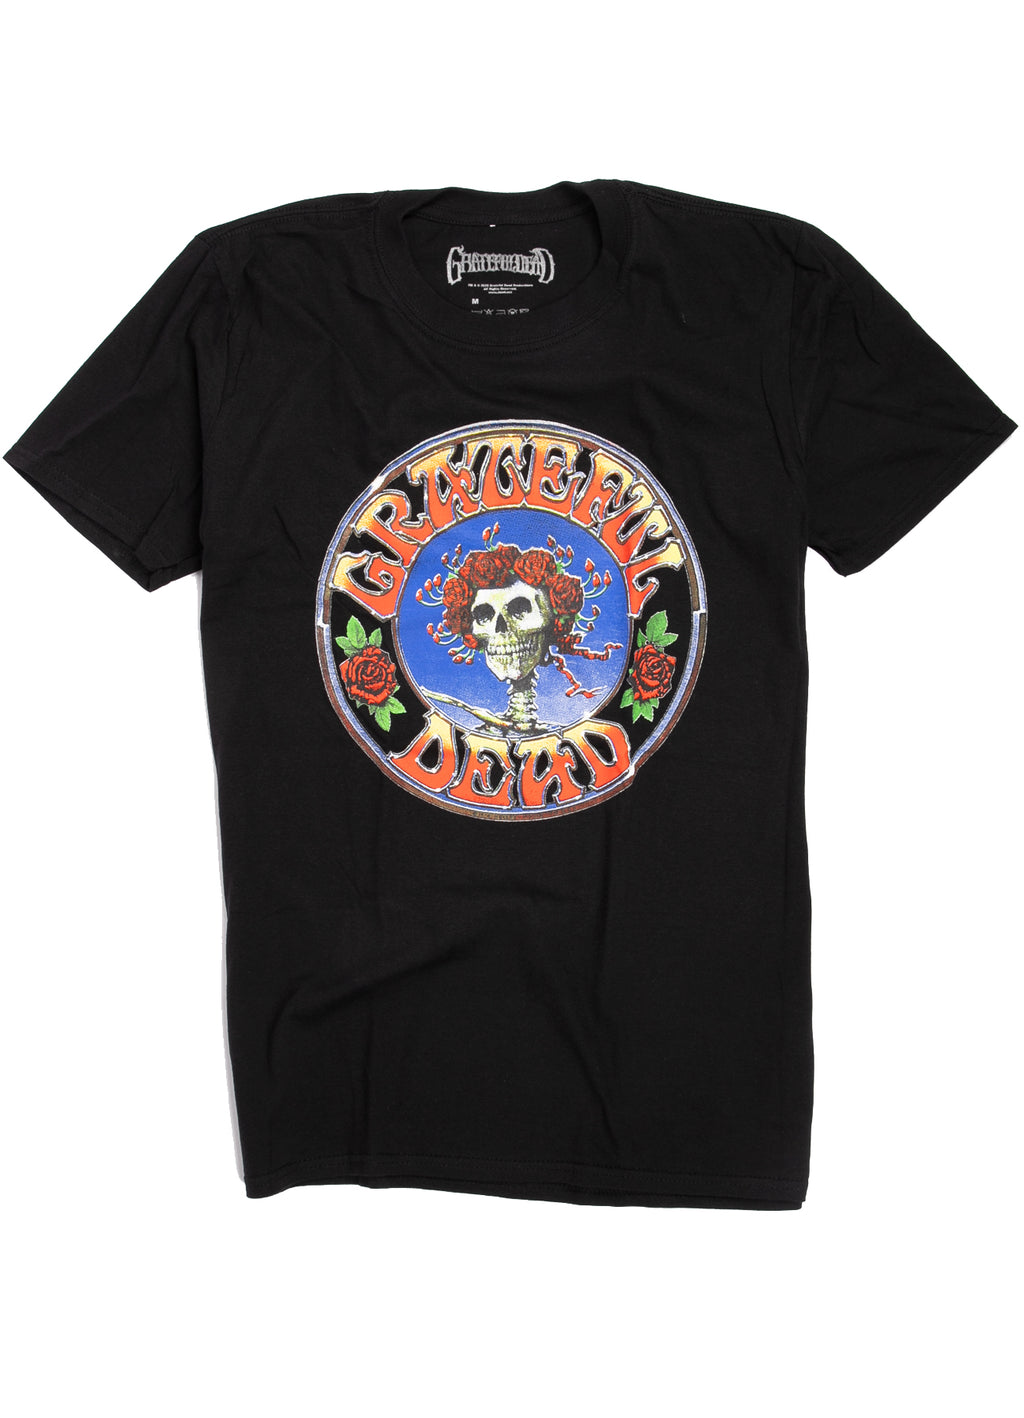 Grateful Dead skull and roses t-shirt.